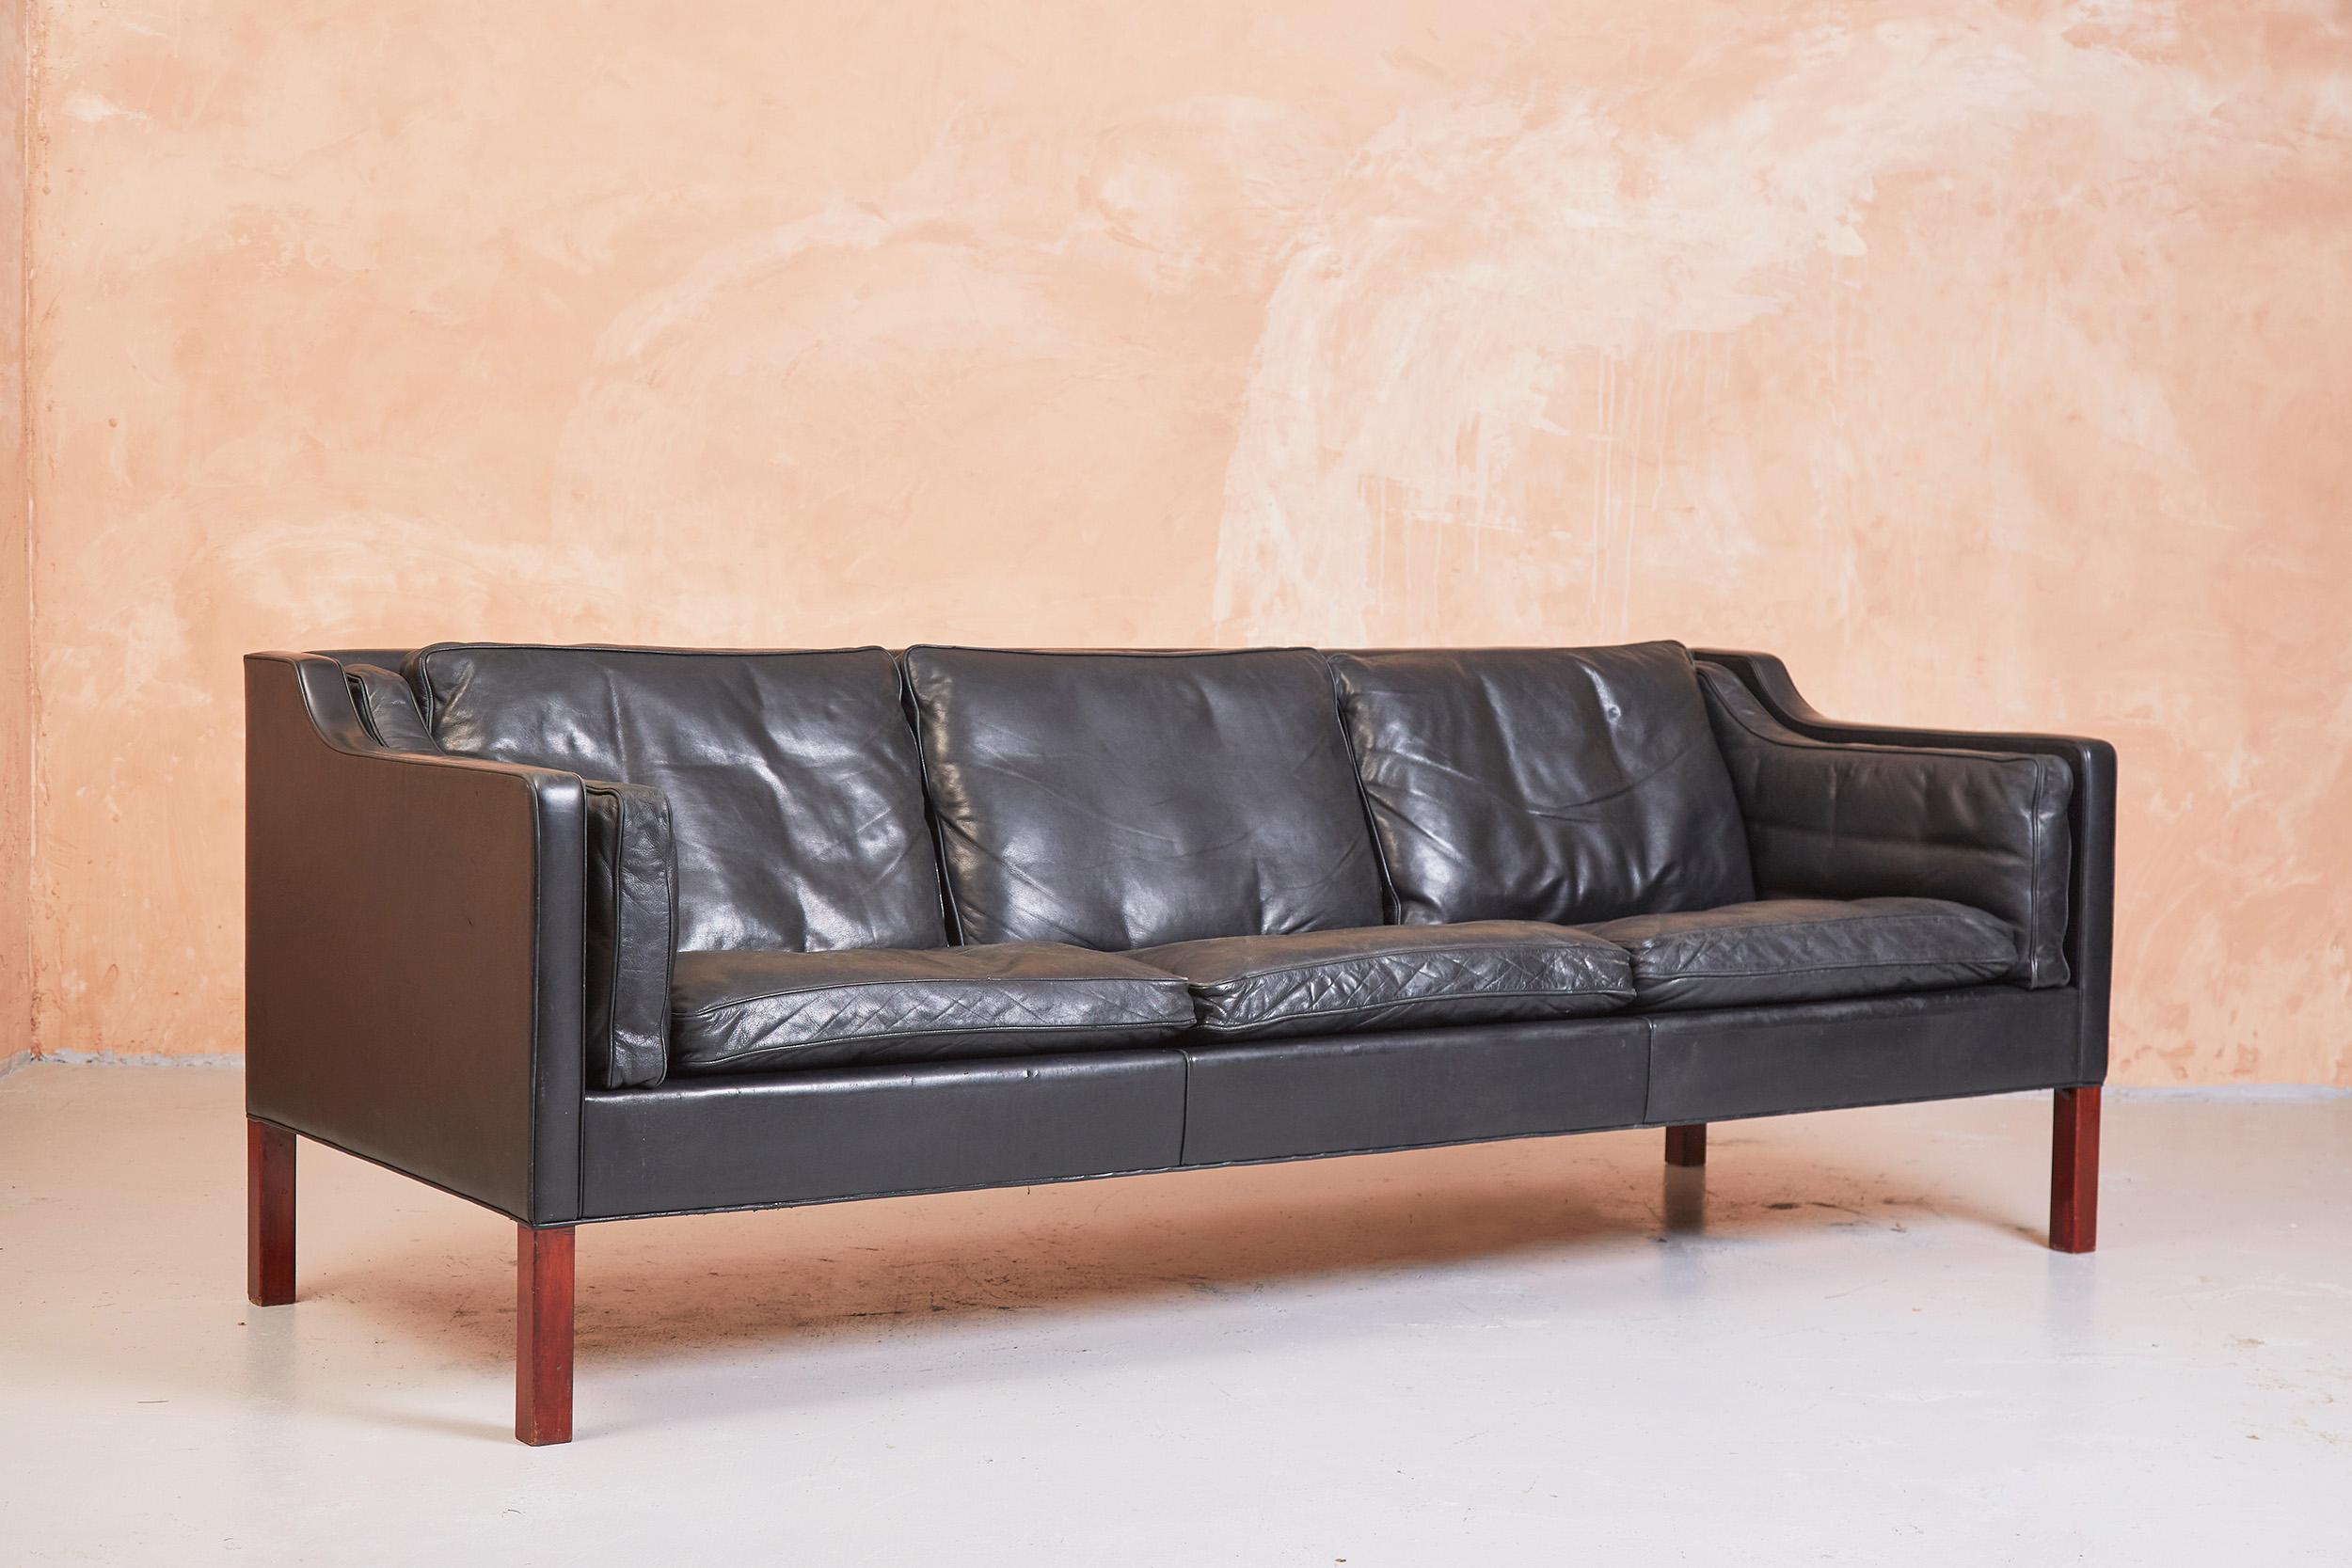 Sofa model 2213 designed by Børge Mogensen

Produced by Fredericia Stolefabrik in Denmark in 1963

Black leather.
 